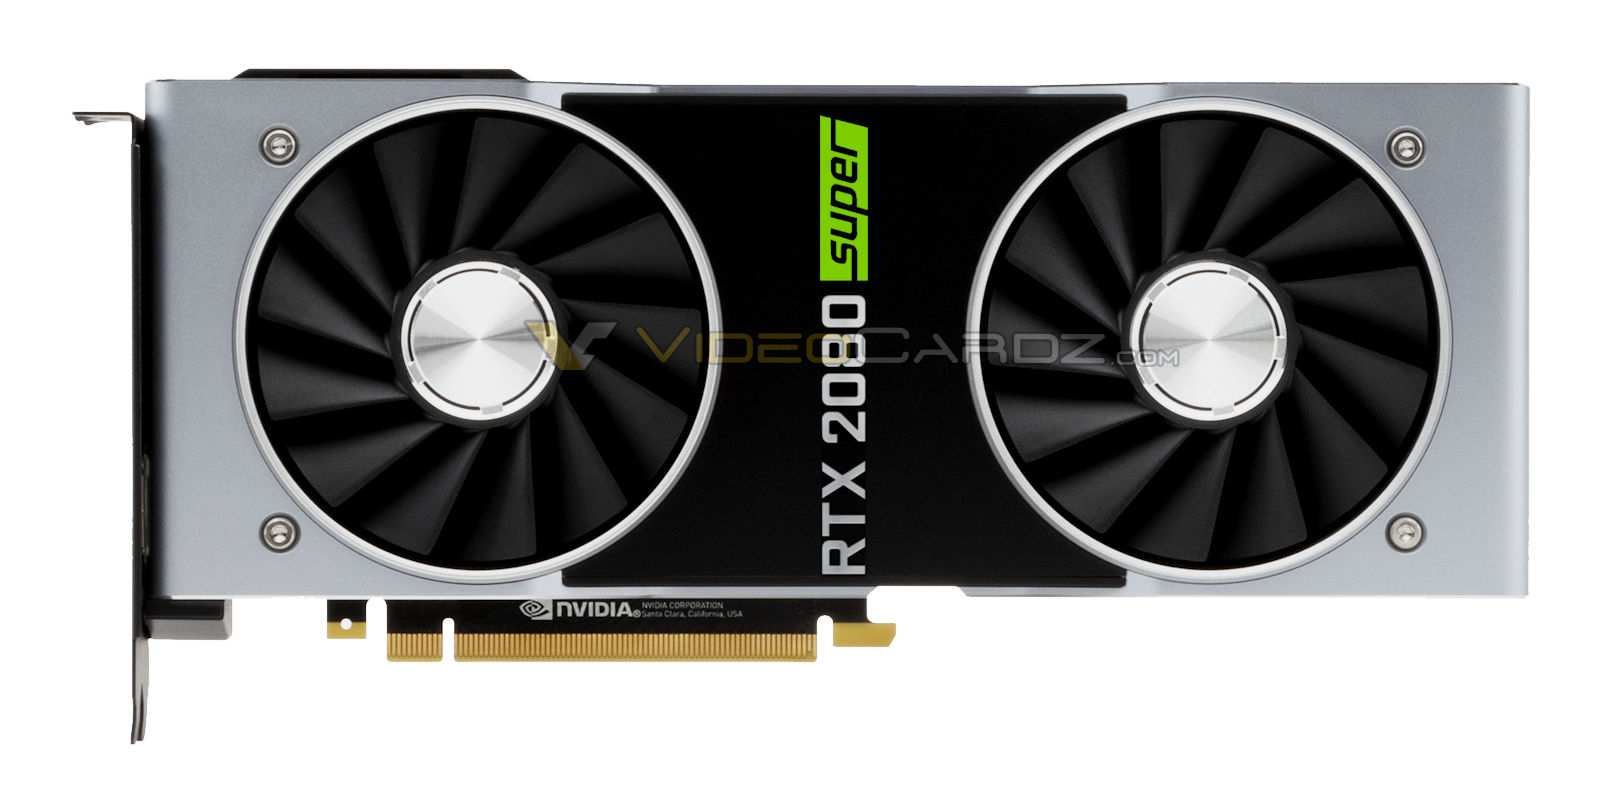 Droop Frosset væbner NVIDIA GeForce RTX 2080 Super GPU - Benchmarks and Specs -  NotebookCheck.net Tech